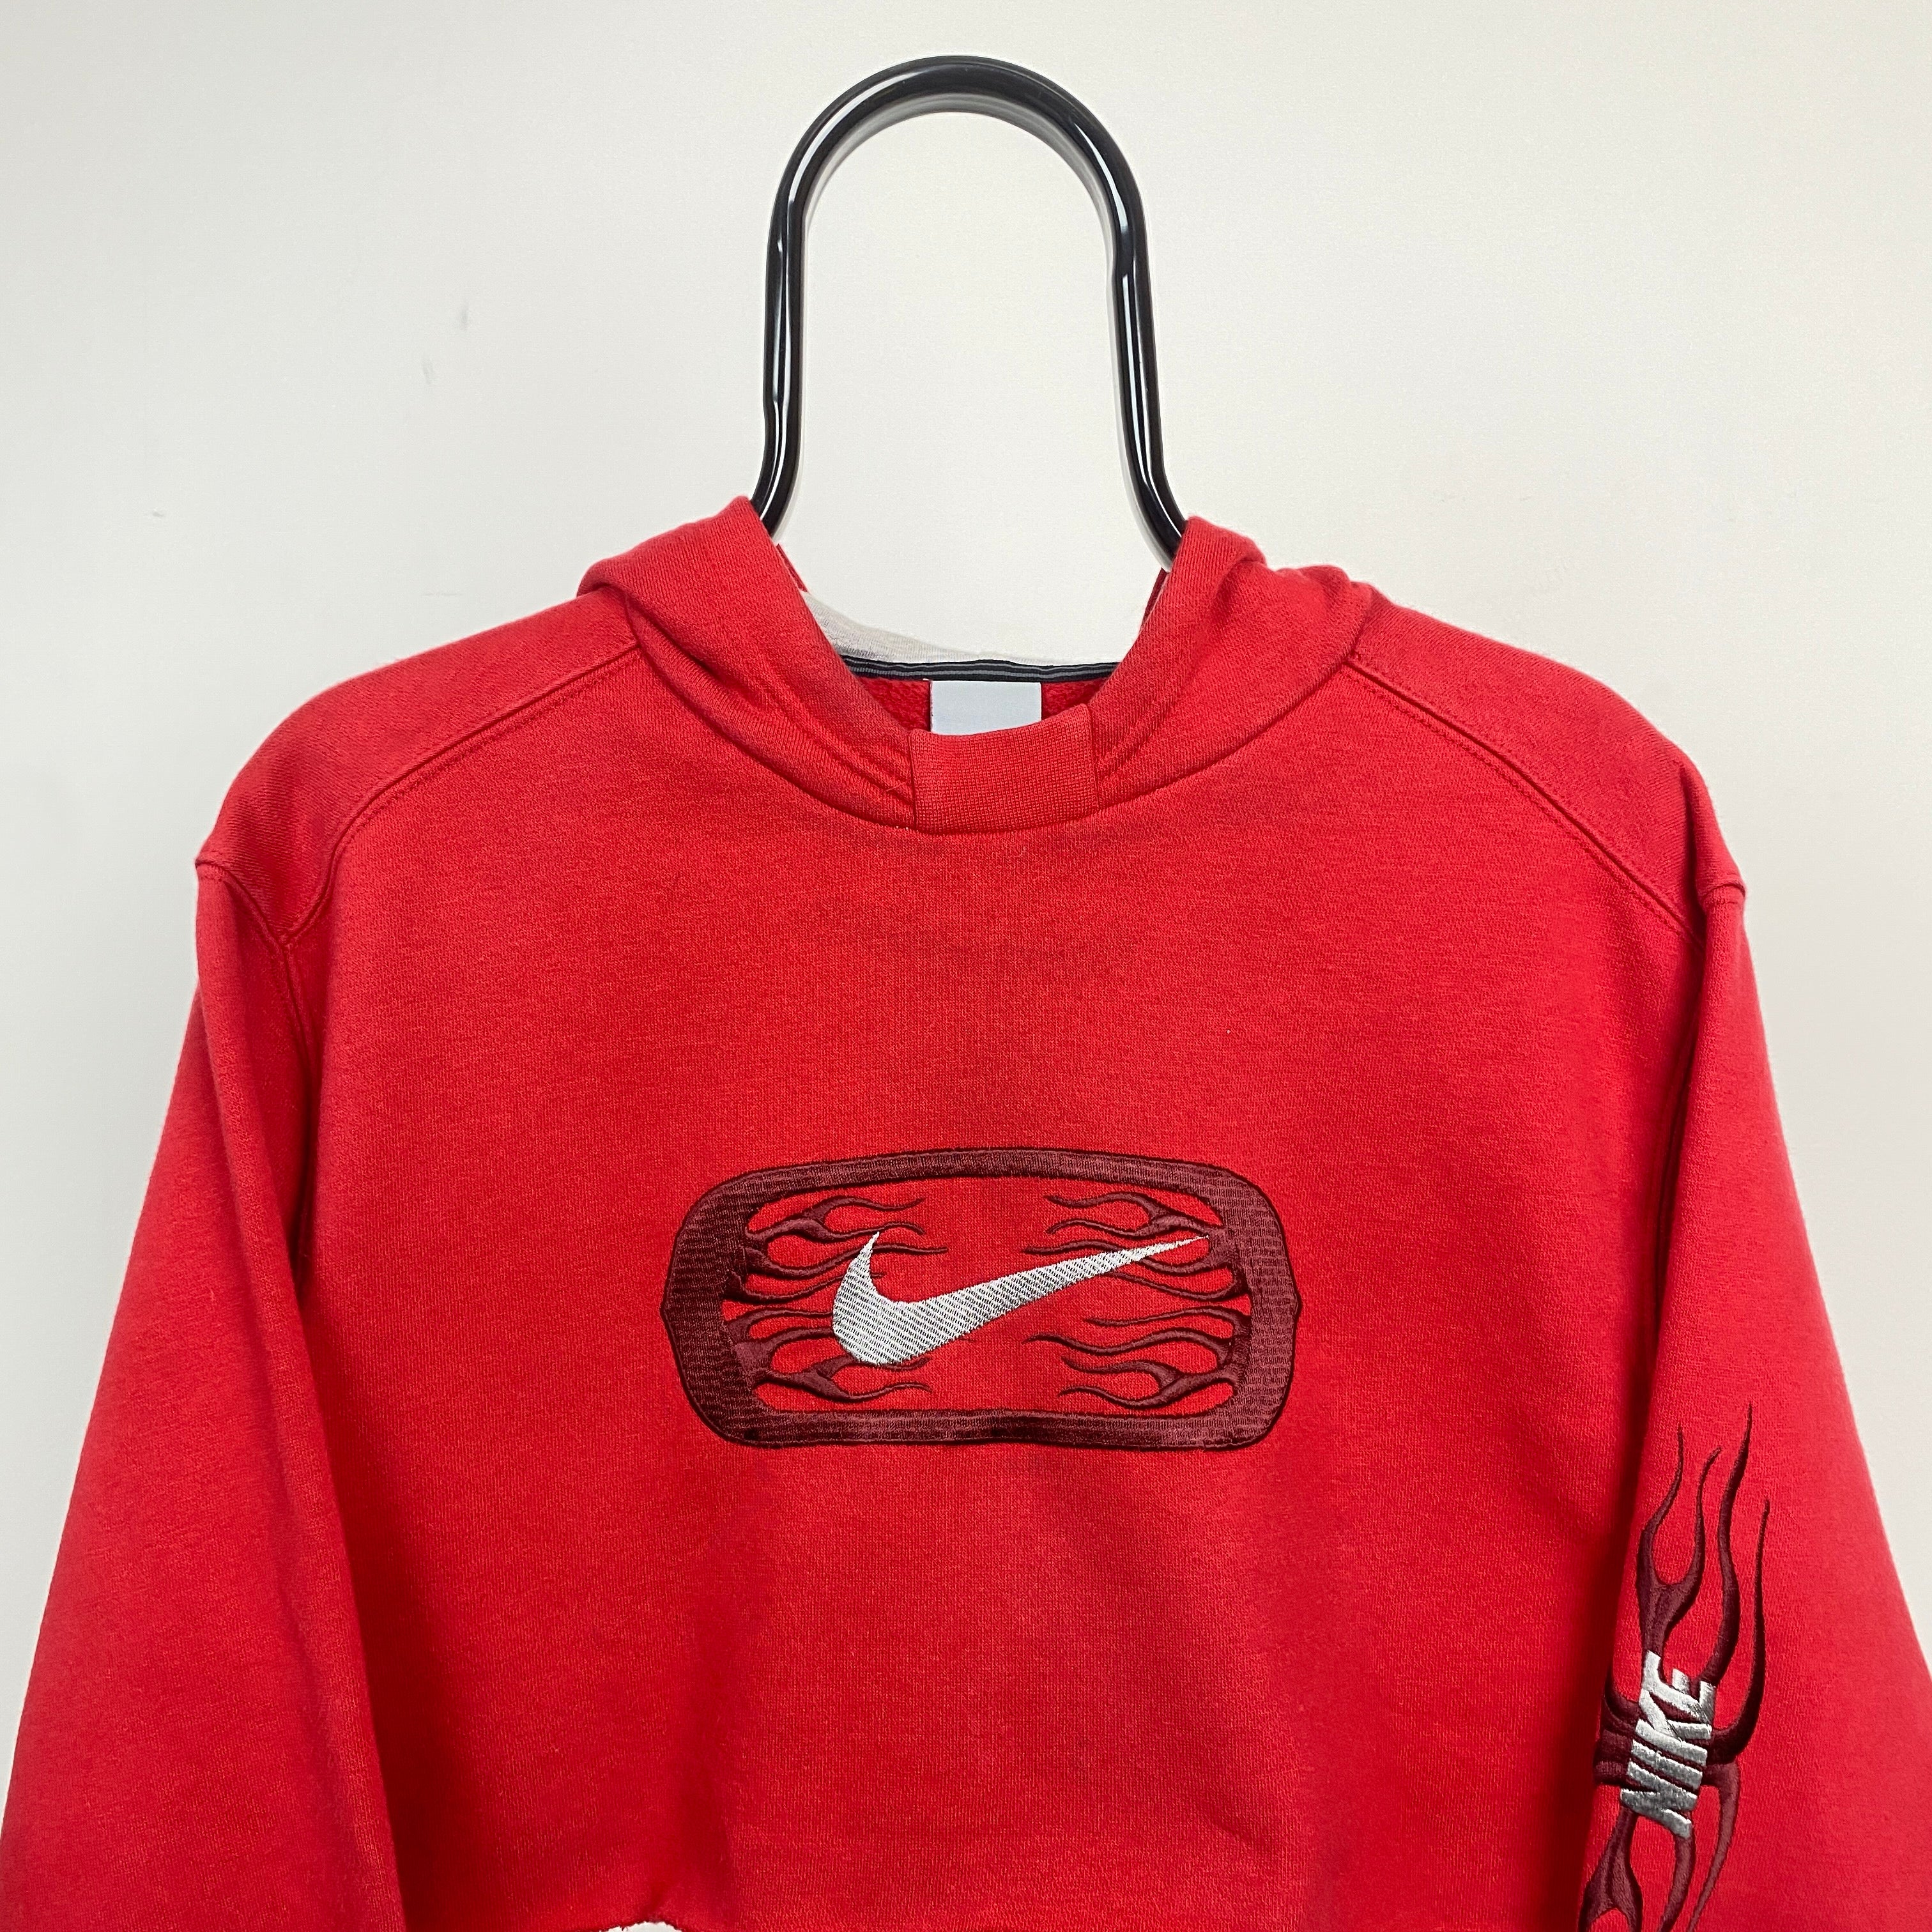 00s Cropped Nike Hoodie Red Large